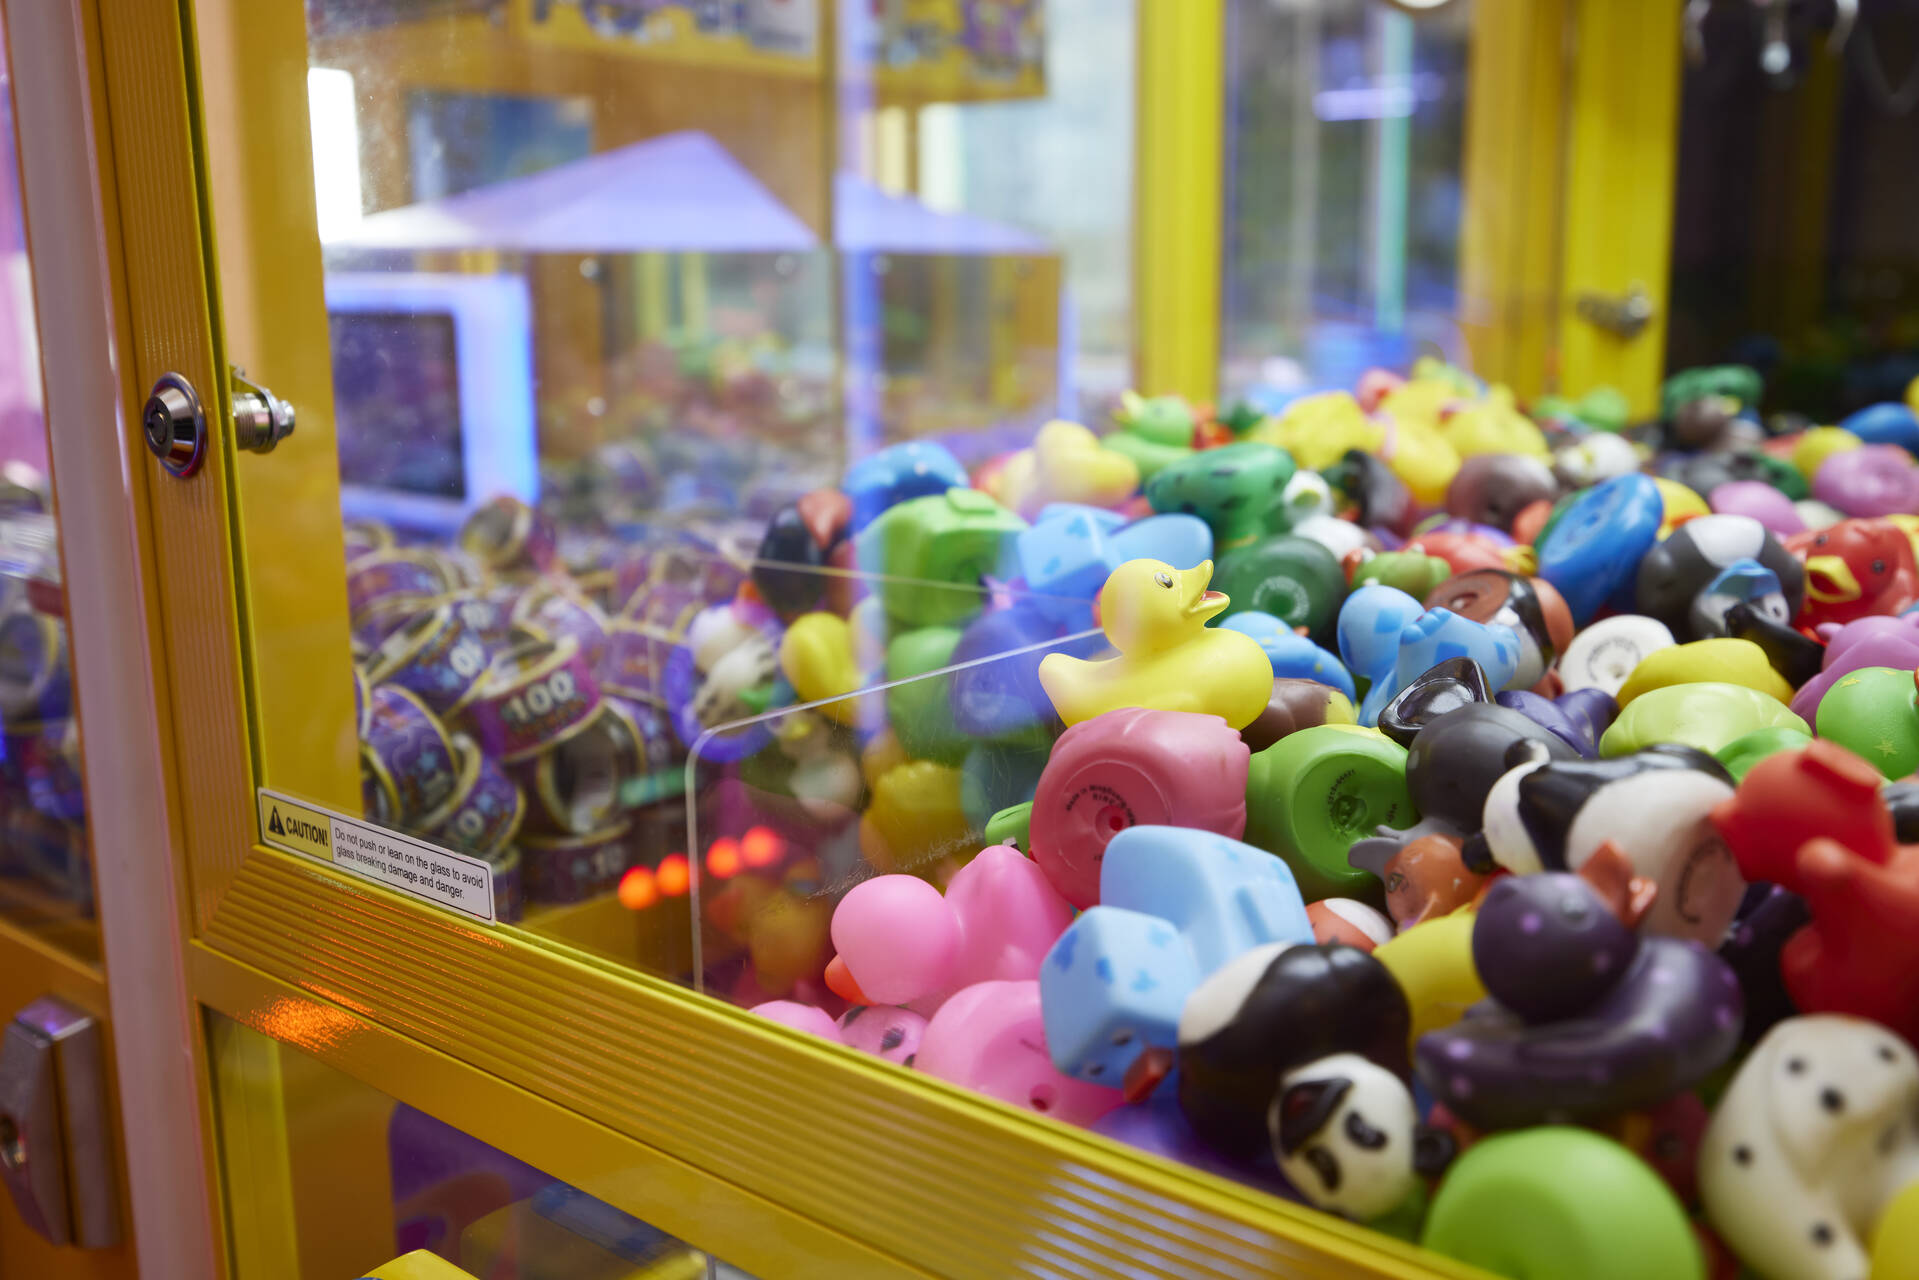 Claw Machine Prizes at the LEGOLAND Hotel Arcade